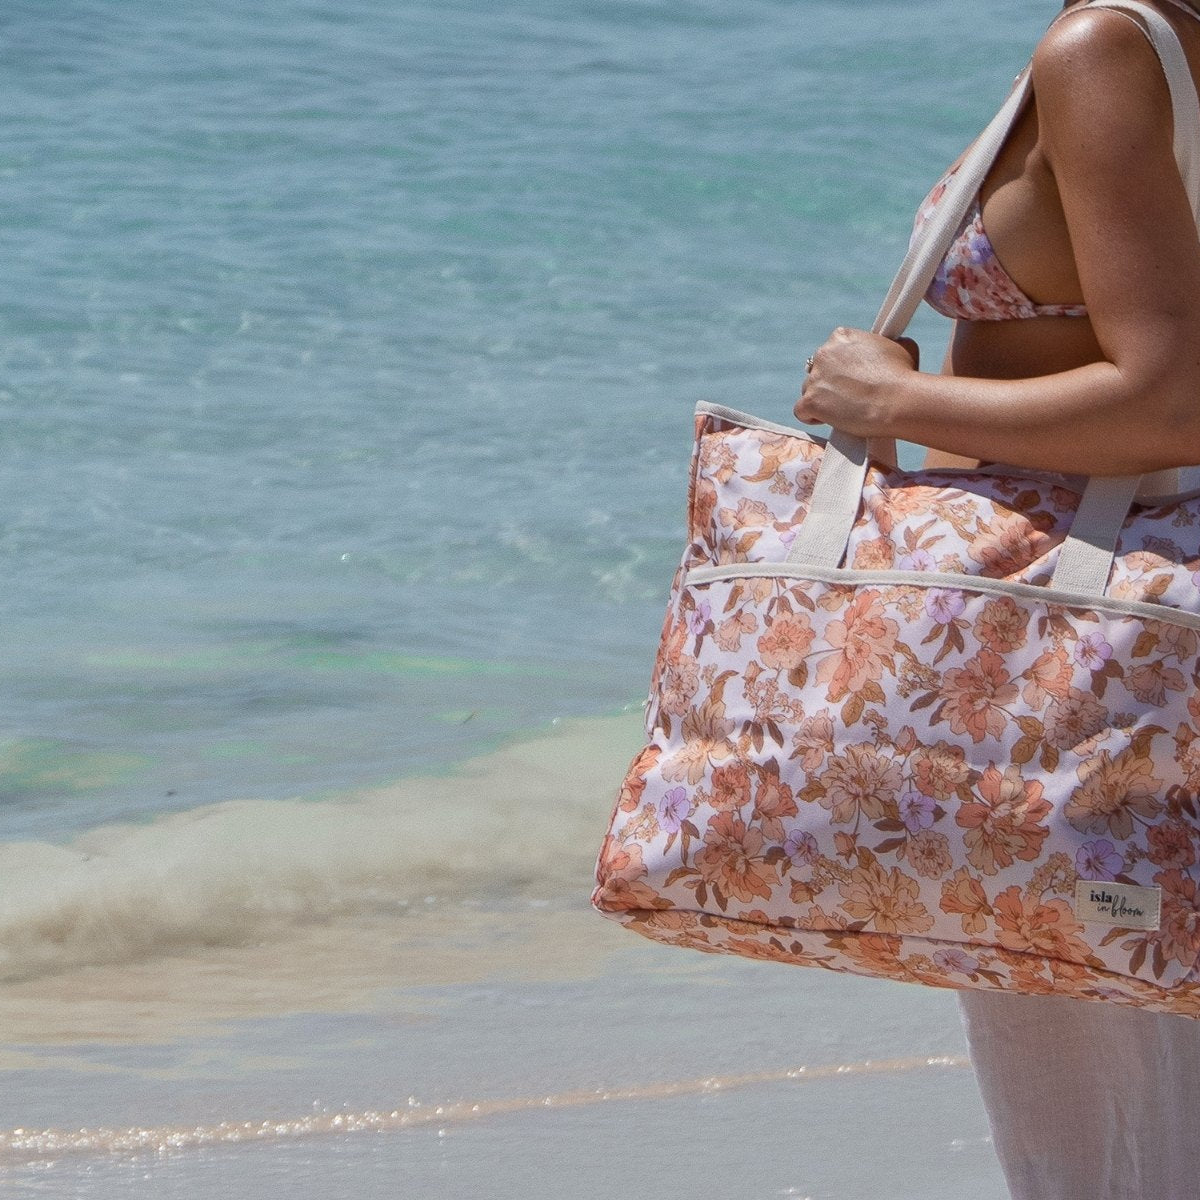 Recycled Canvas Beach Bags Australia